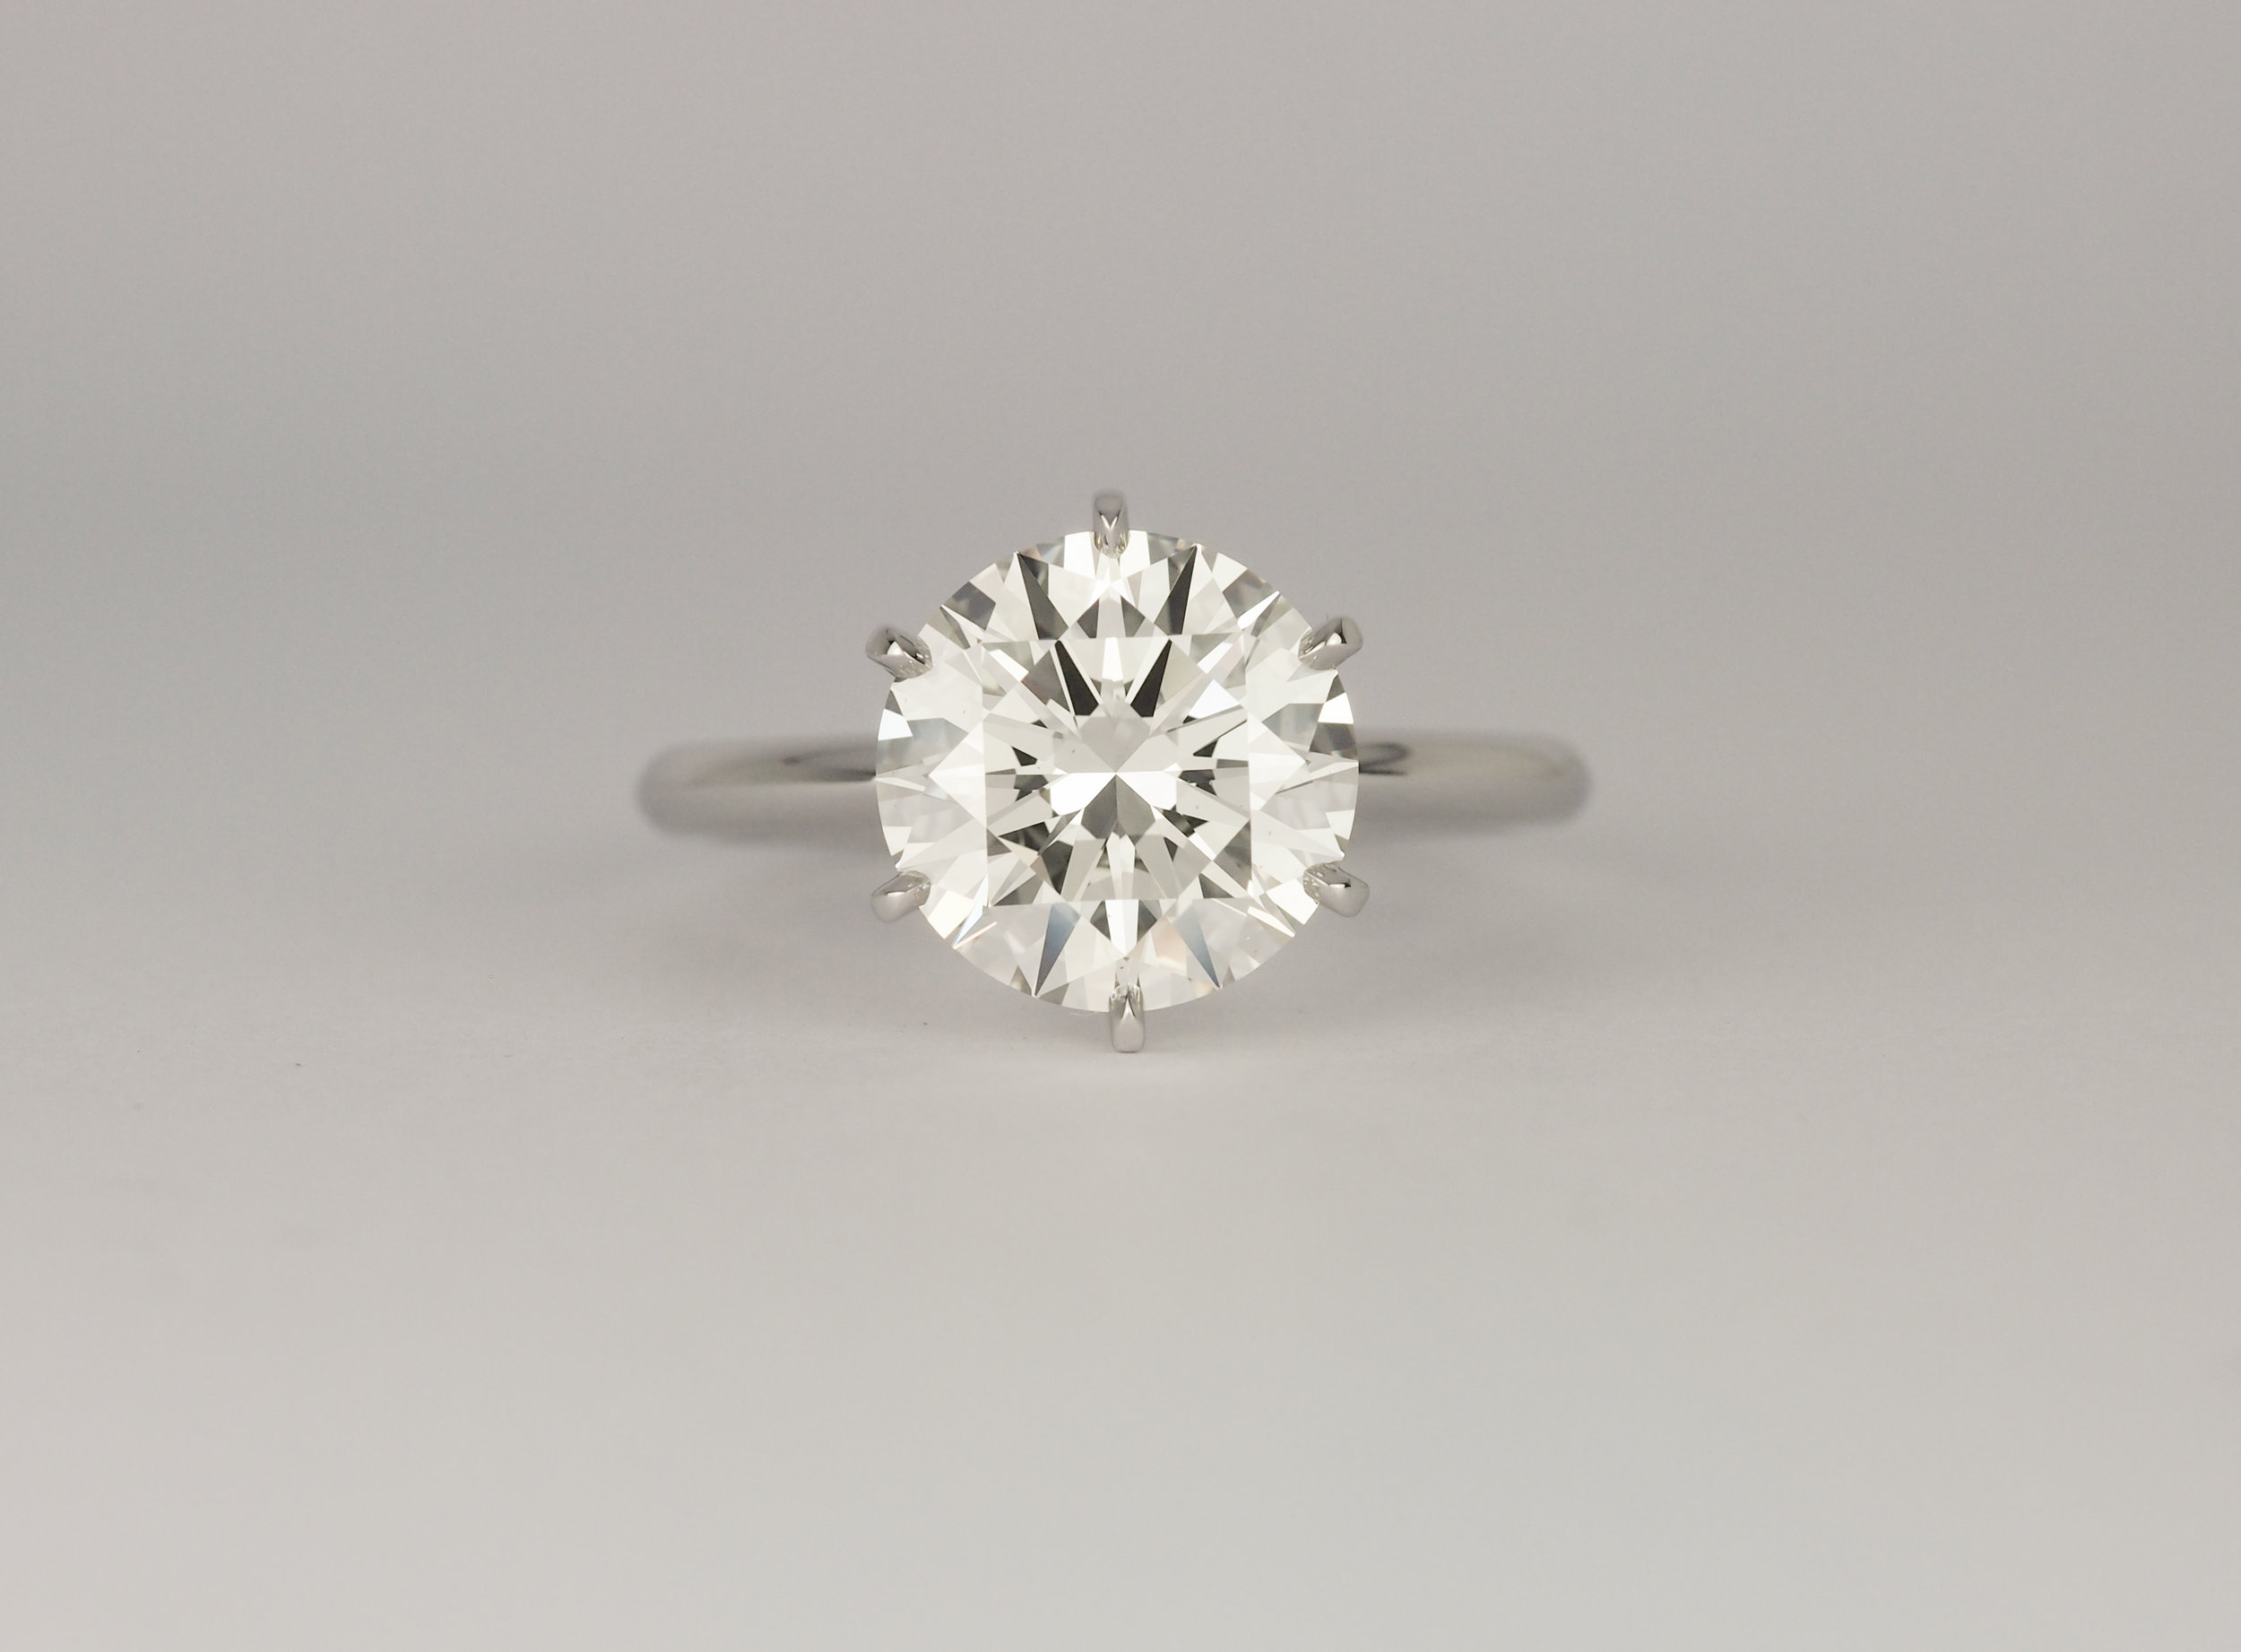  Six claw solitaire round brilliant cut platinum engagement ring 